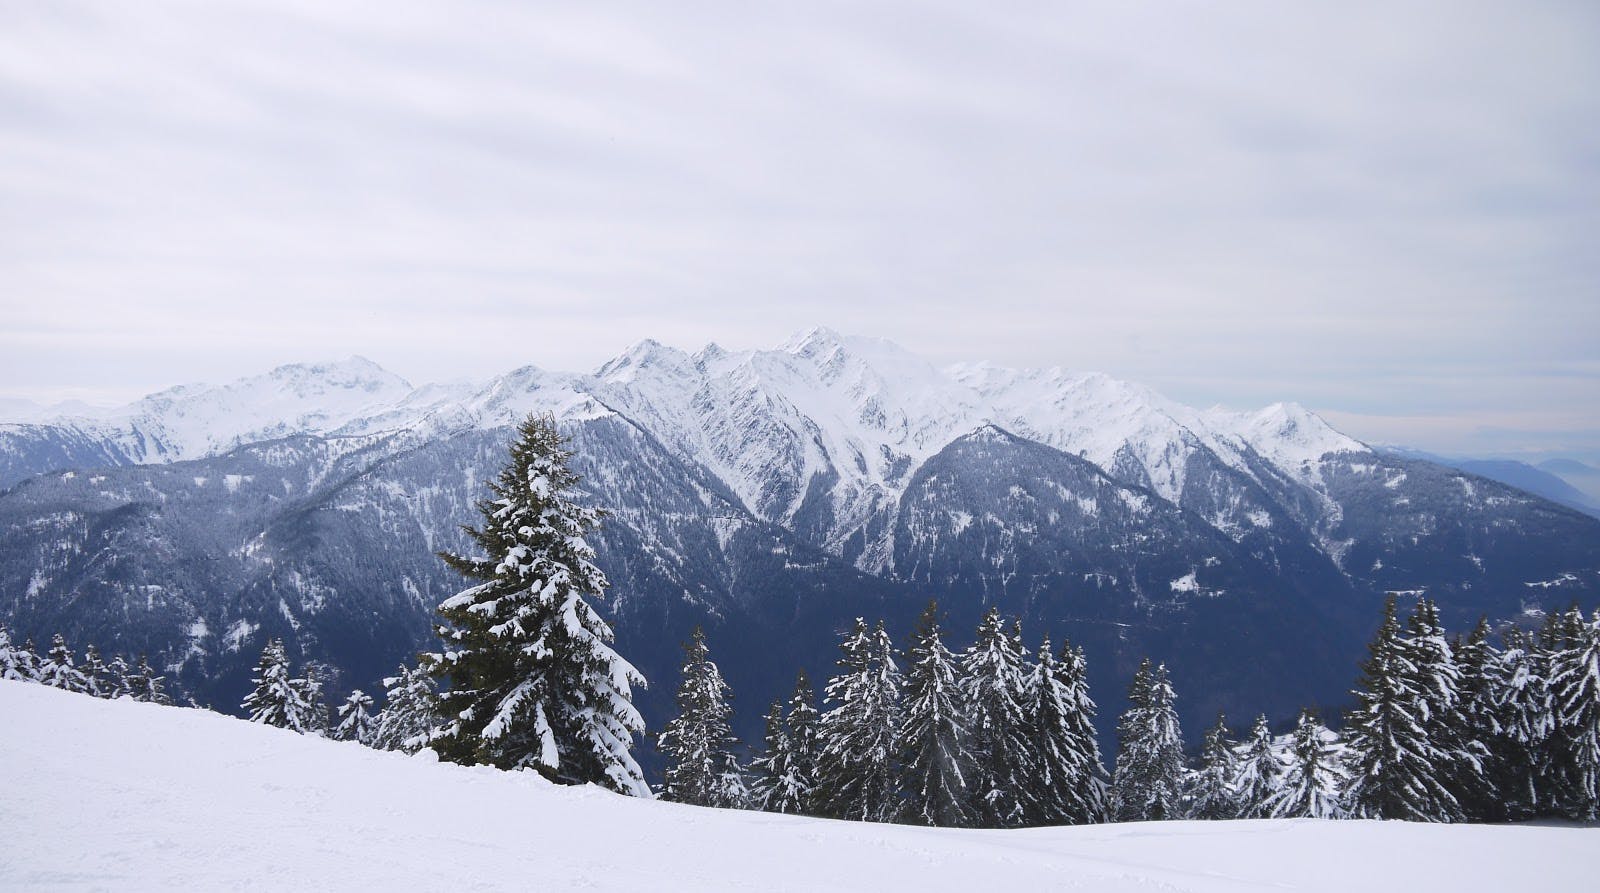 DIY Ski holidays to the French Alps